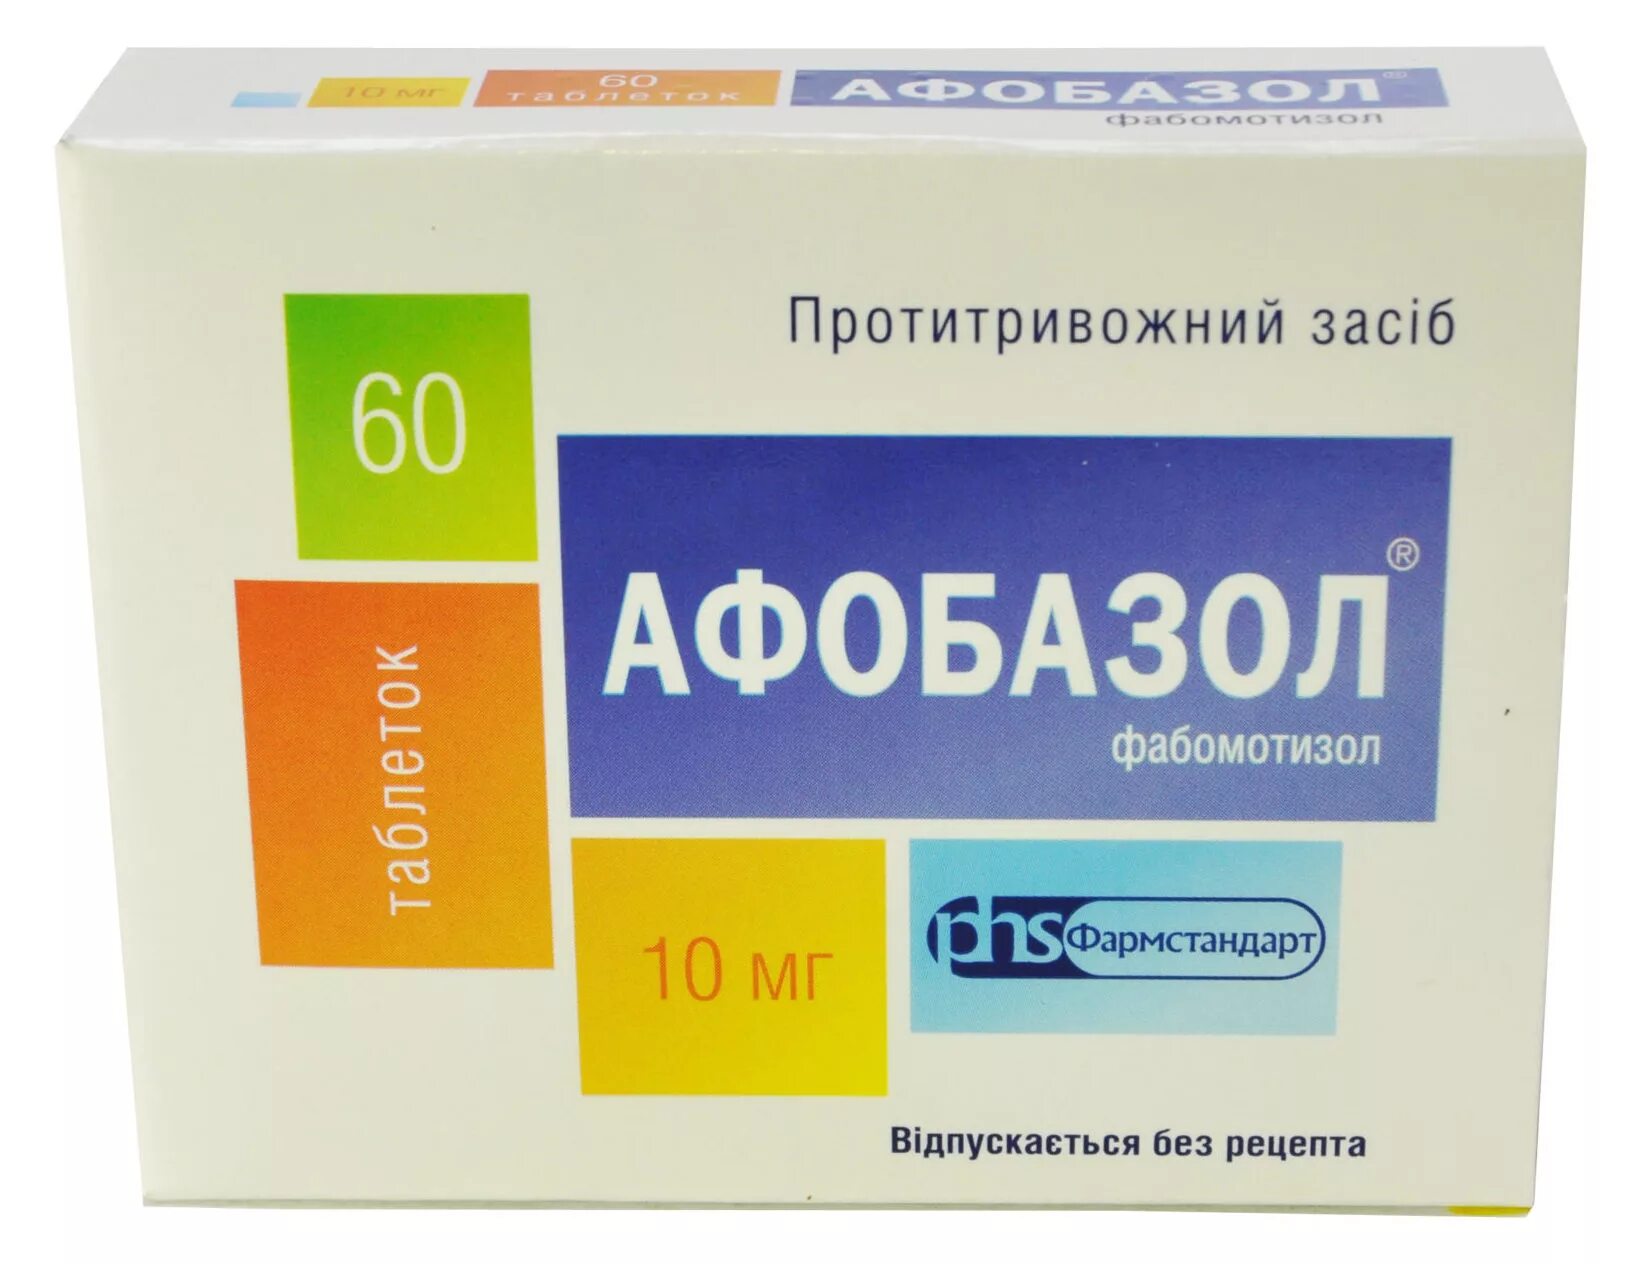 Афобазол табл. 10 мг №60. Афобазол 10мг 60. Афобазол табл. 10мг n60. Афобазол таб 10 мг 60.